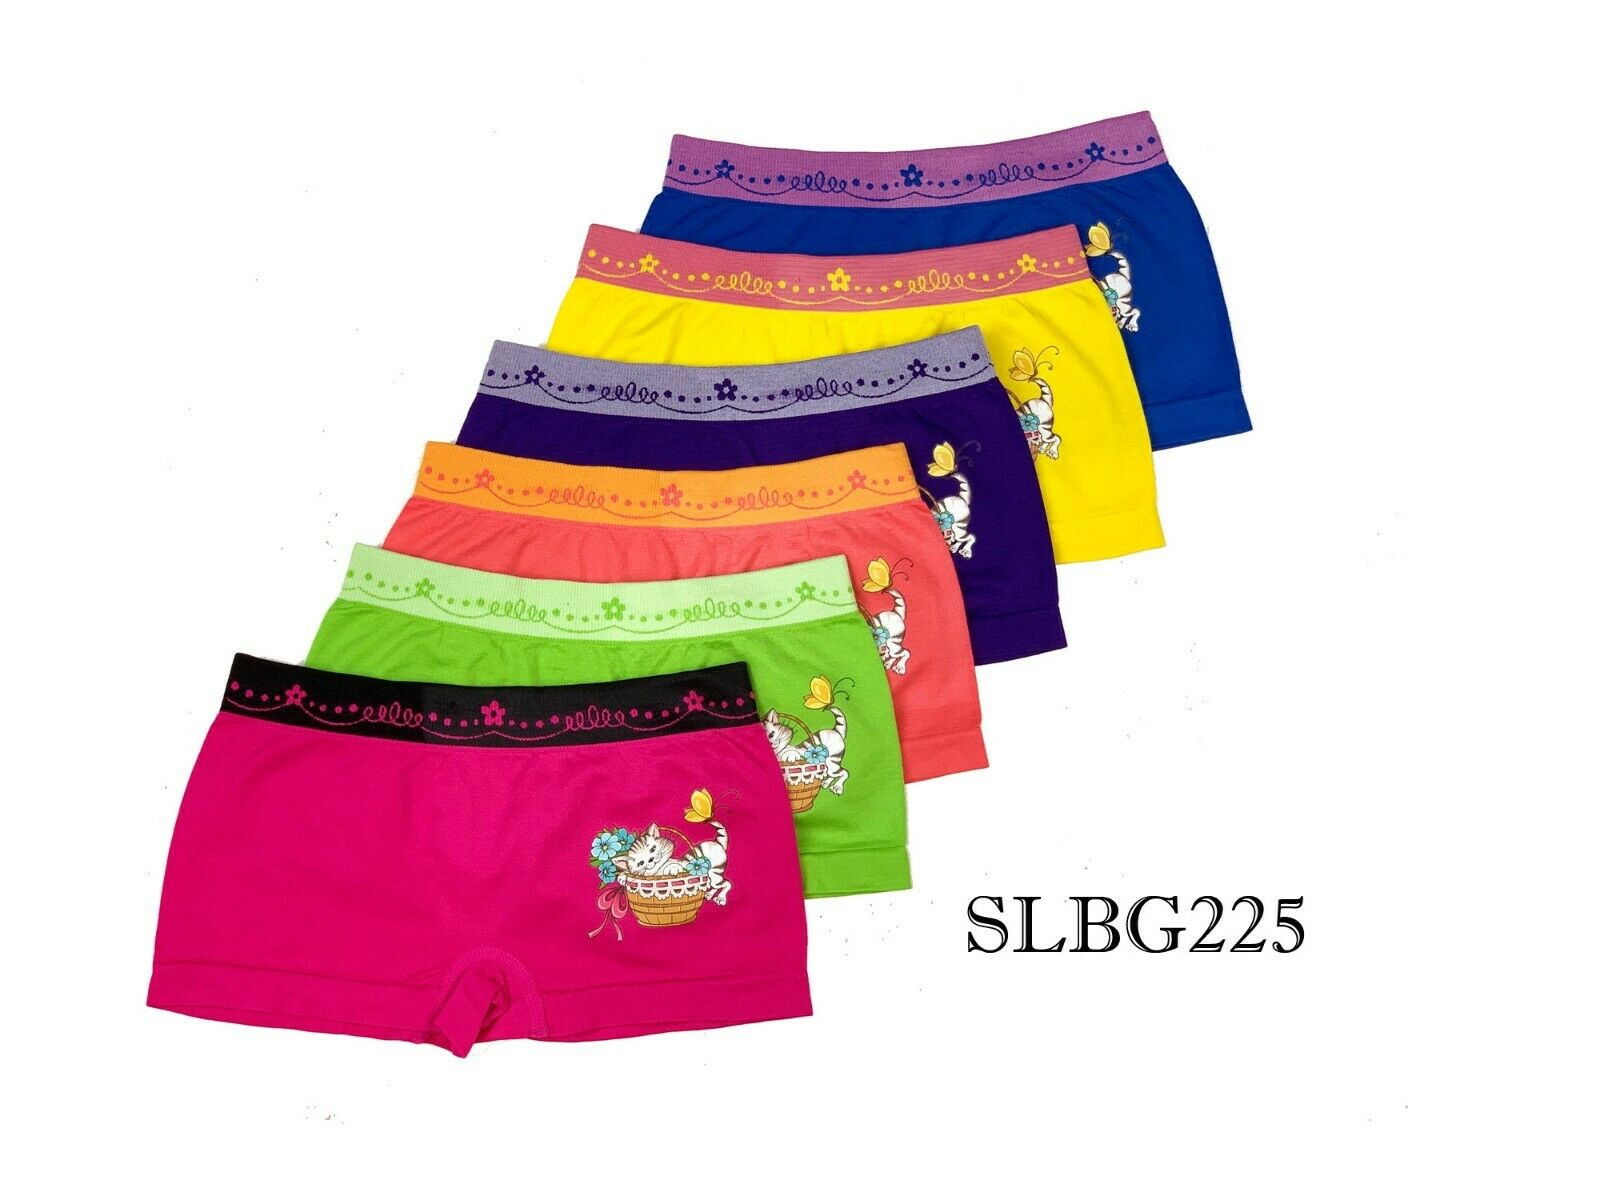 6 Girl's Children Kids Underwear Panties Seamless Boxer Short Mixed Colors S M L